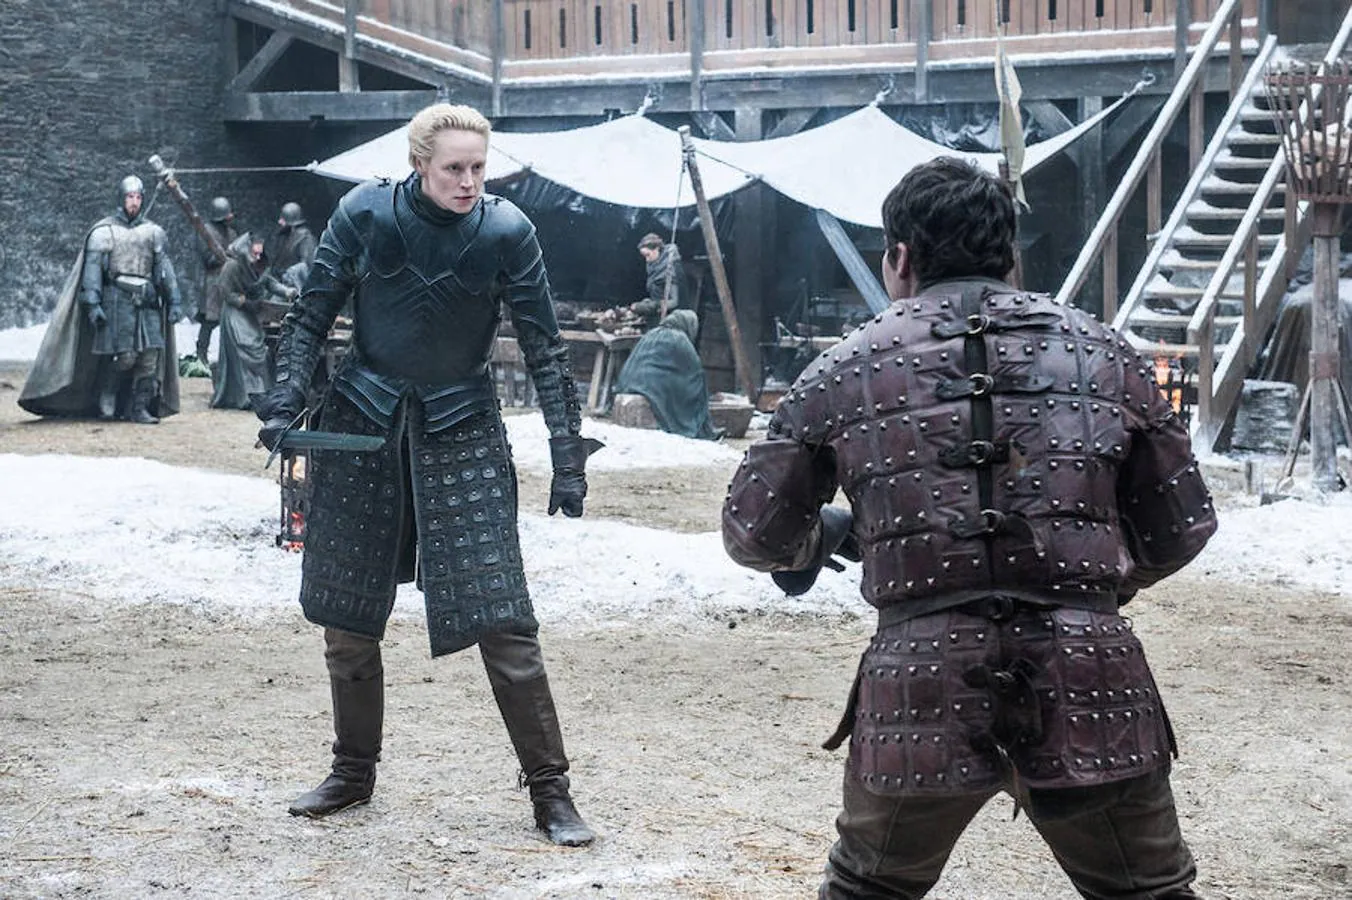 Brienne de Tarth enfrentándose a Podrick Payne en el Muro. 